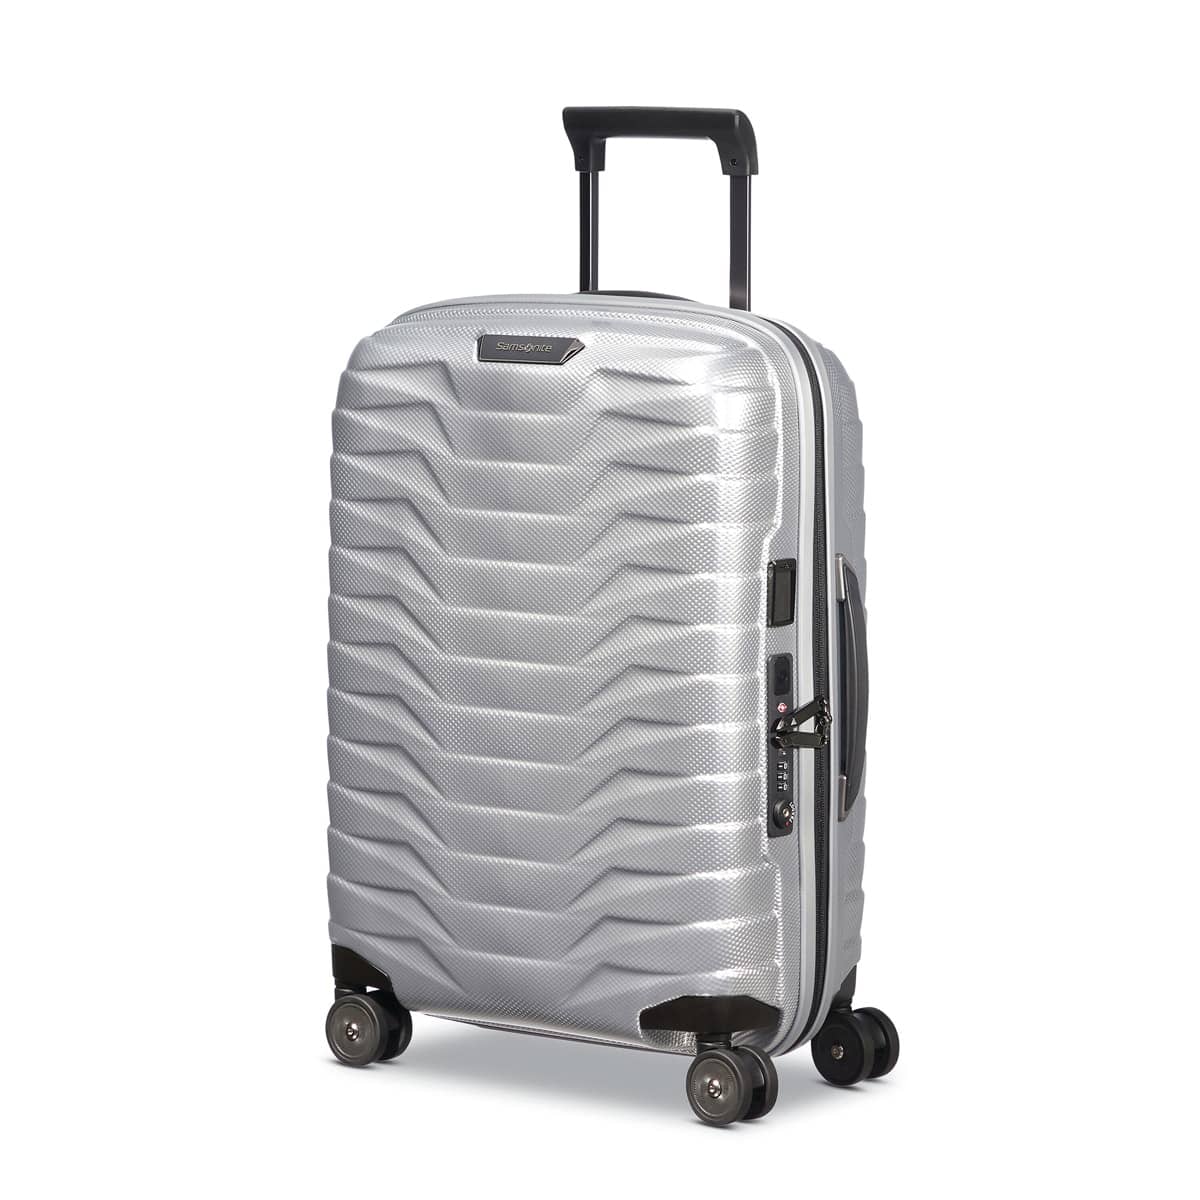 Most lightweight Samsonite suitcase